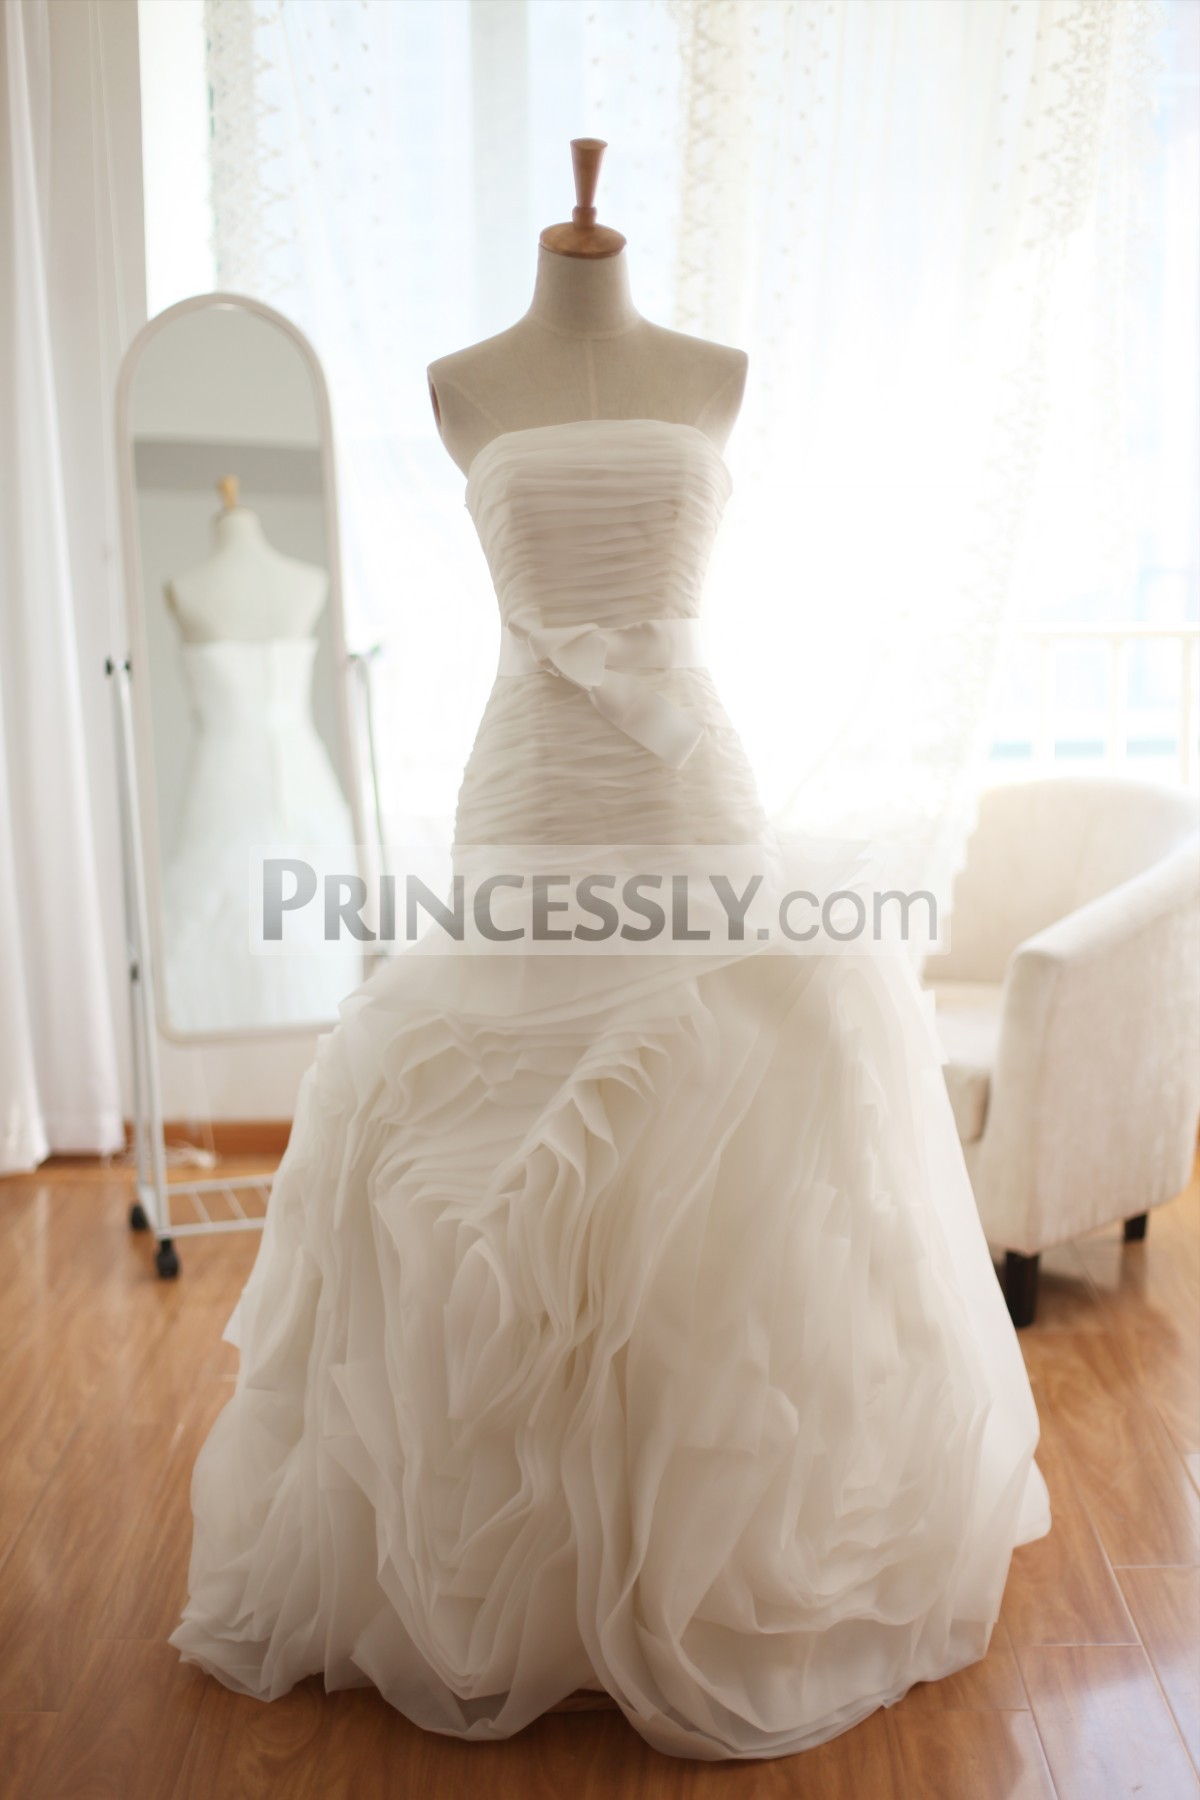 Princessly.com-K1001946-Organza Mermaid Wedding Dress Strapless Sweetheart Ruffle Flowers Train Dress-31